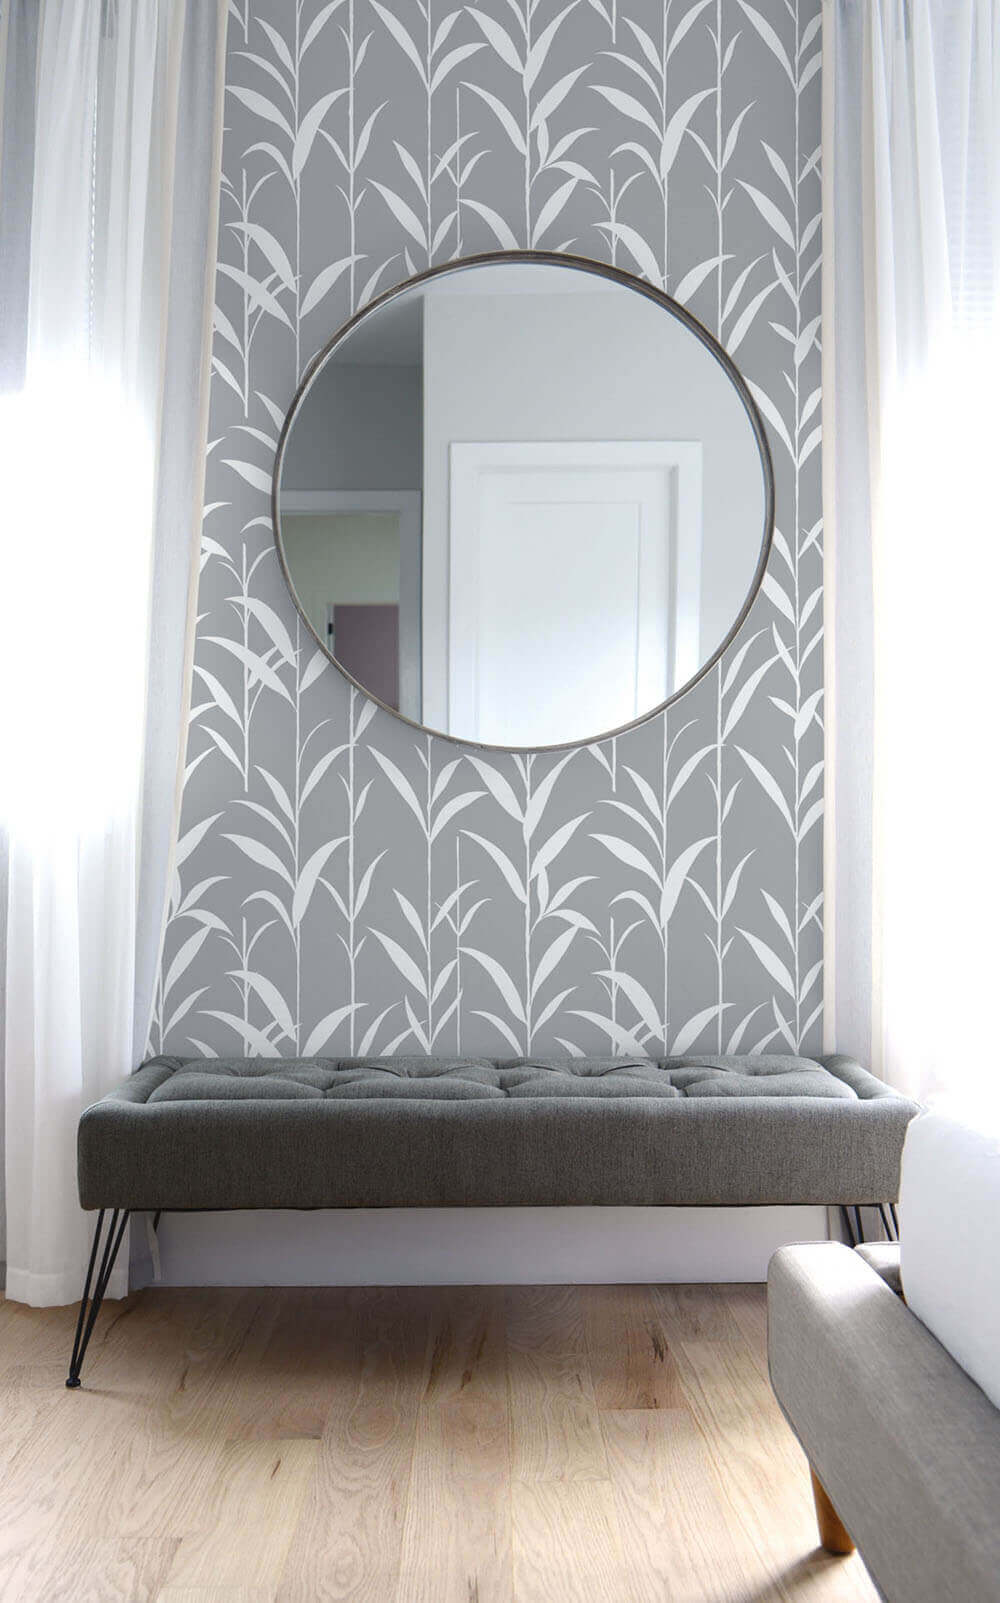 NextWall Bamboo Leaves Peel & Stick Wallpaper - Gray